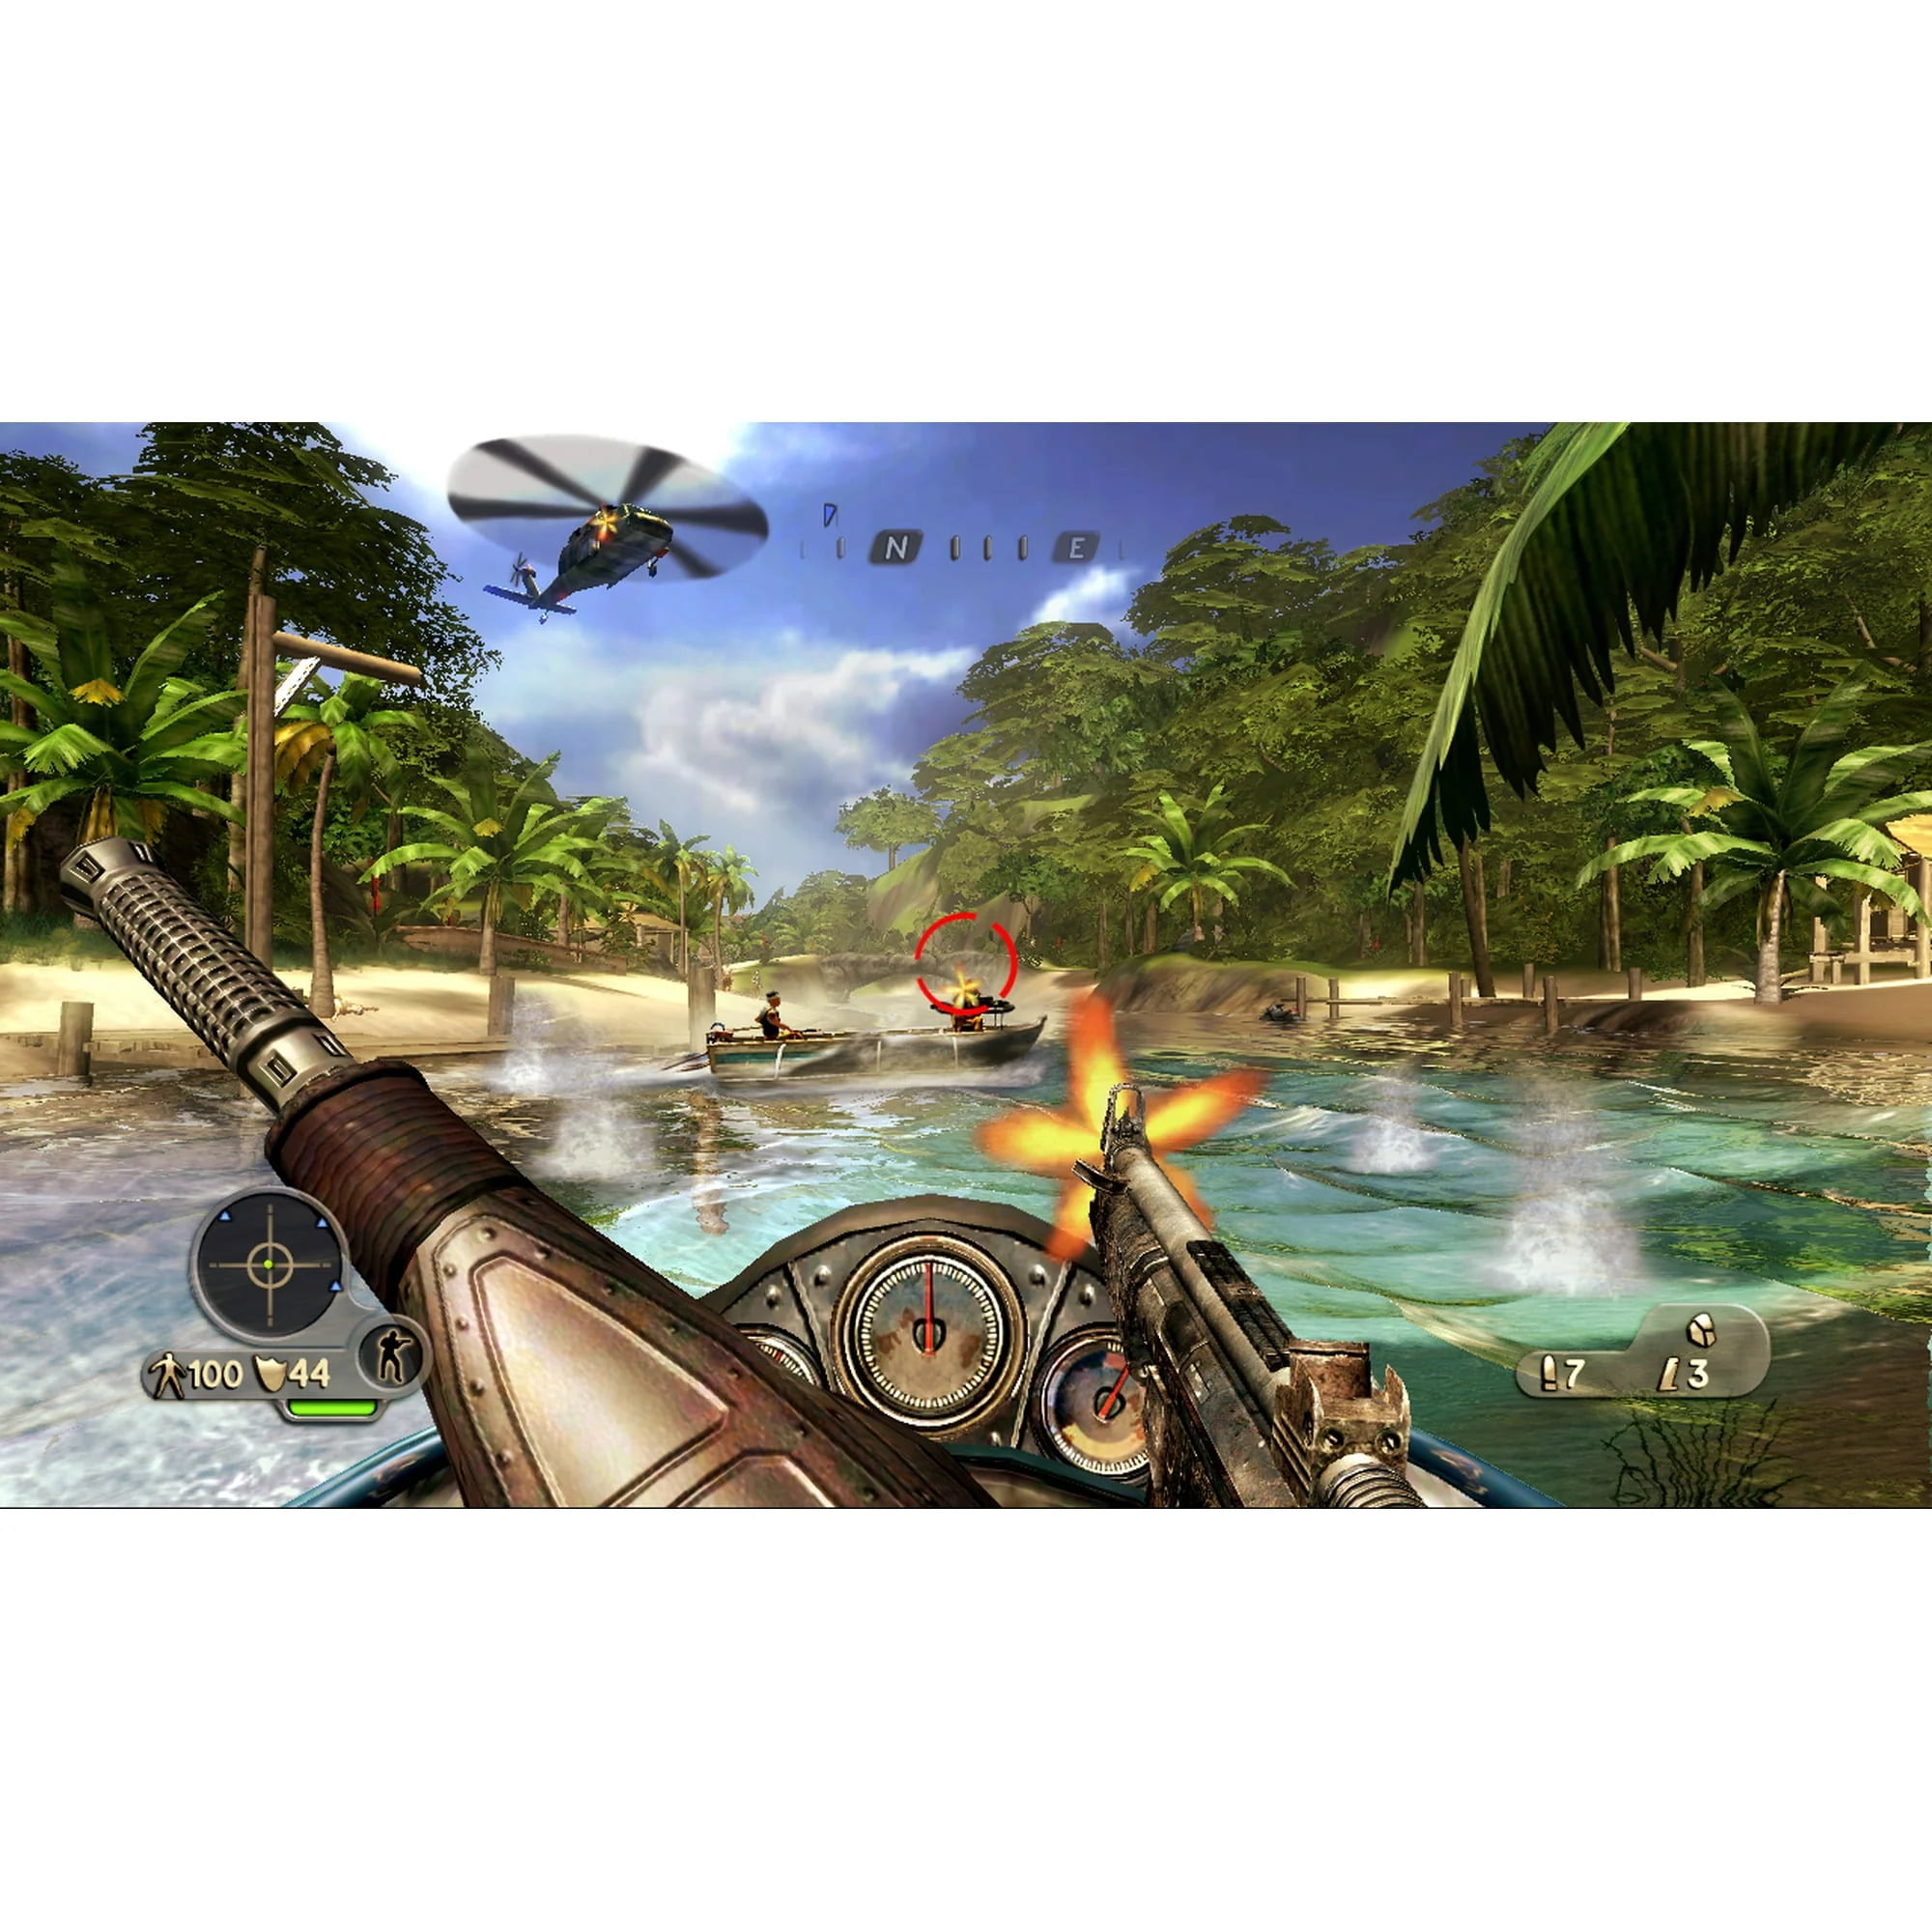 Far Cry Instincts Predator - Jogo XBOX 360 Midia Fisica | Lojas 99